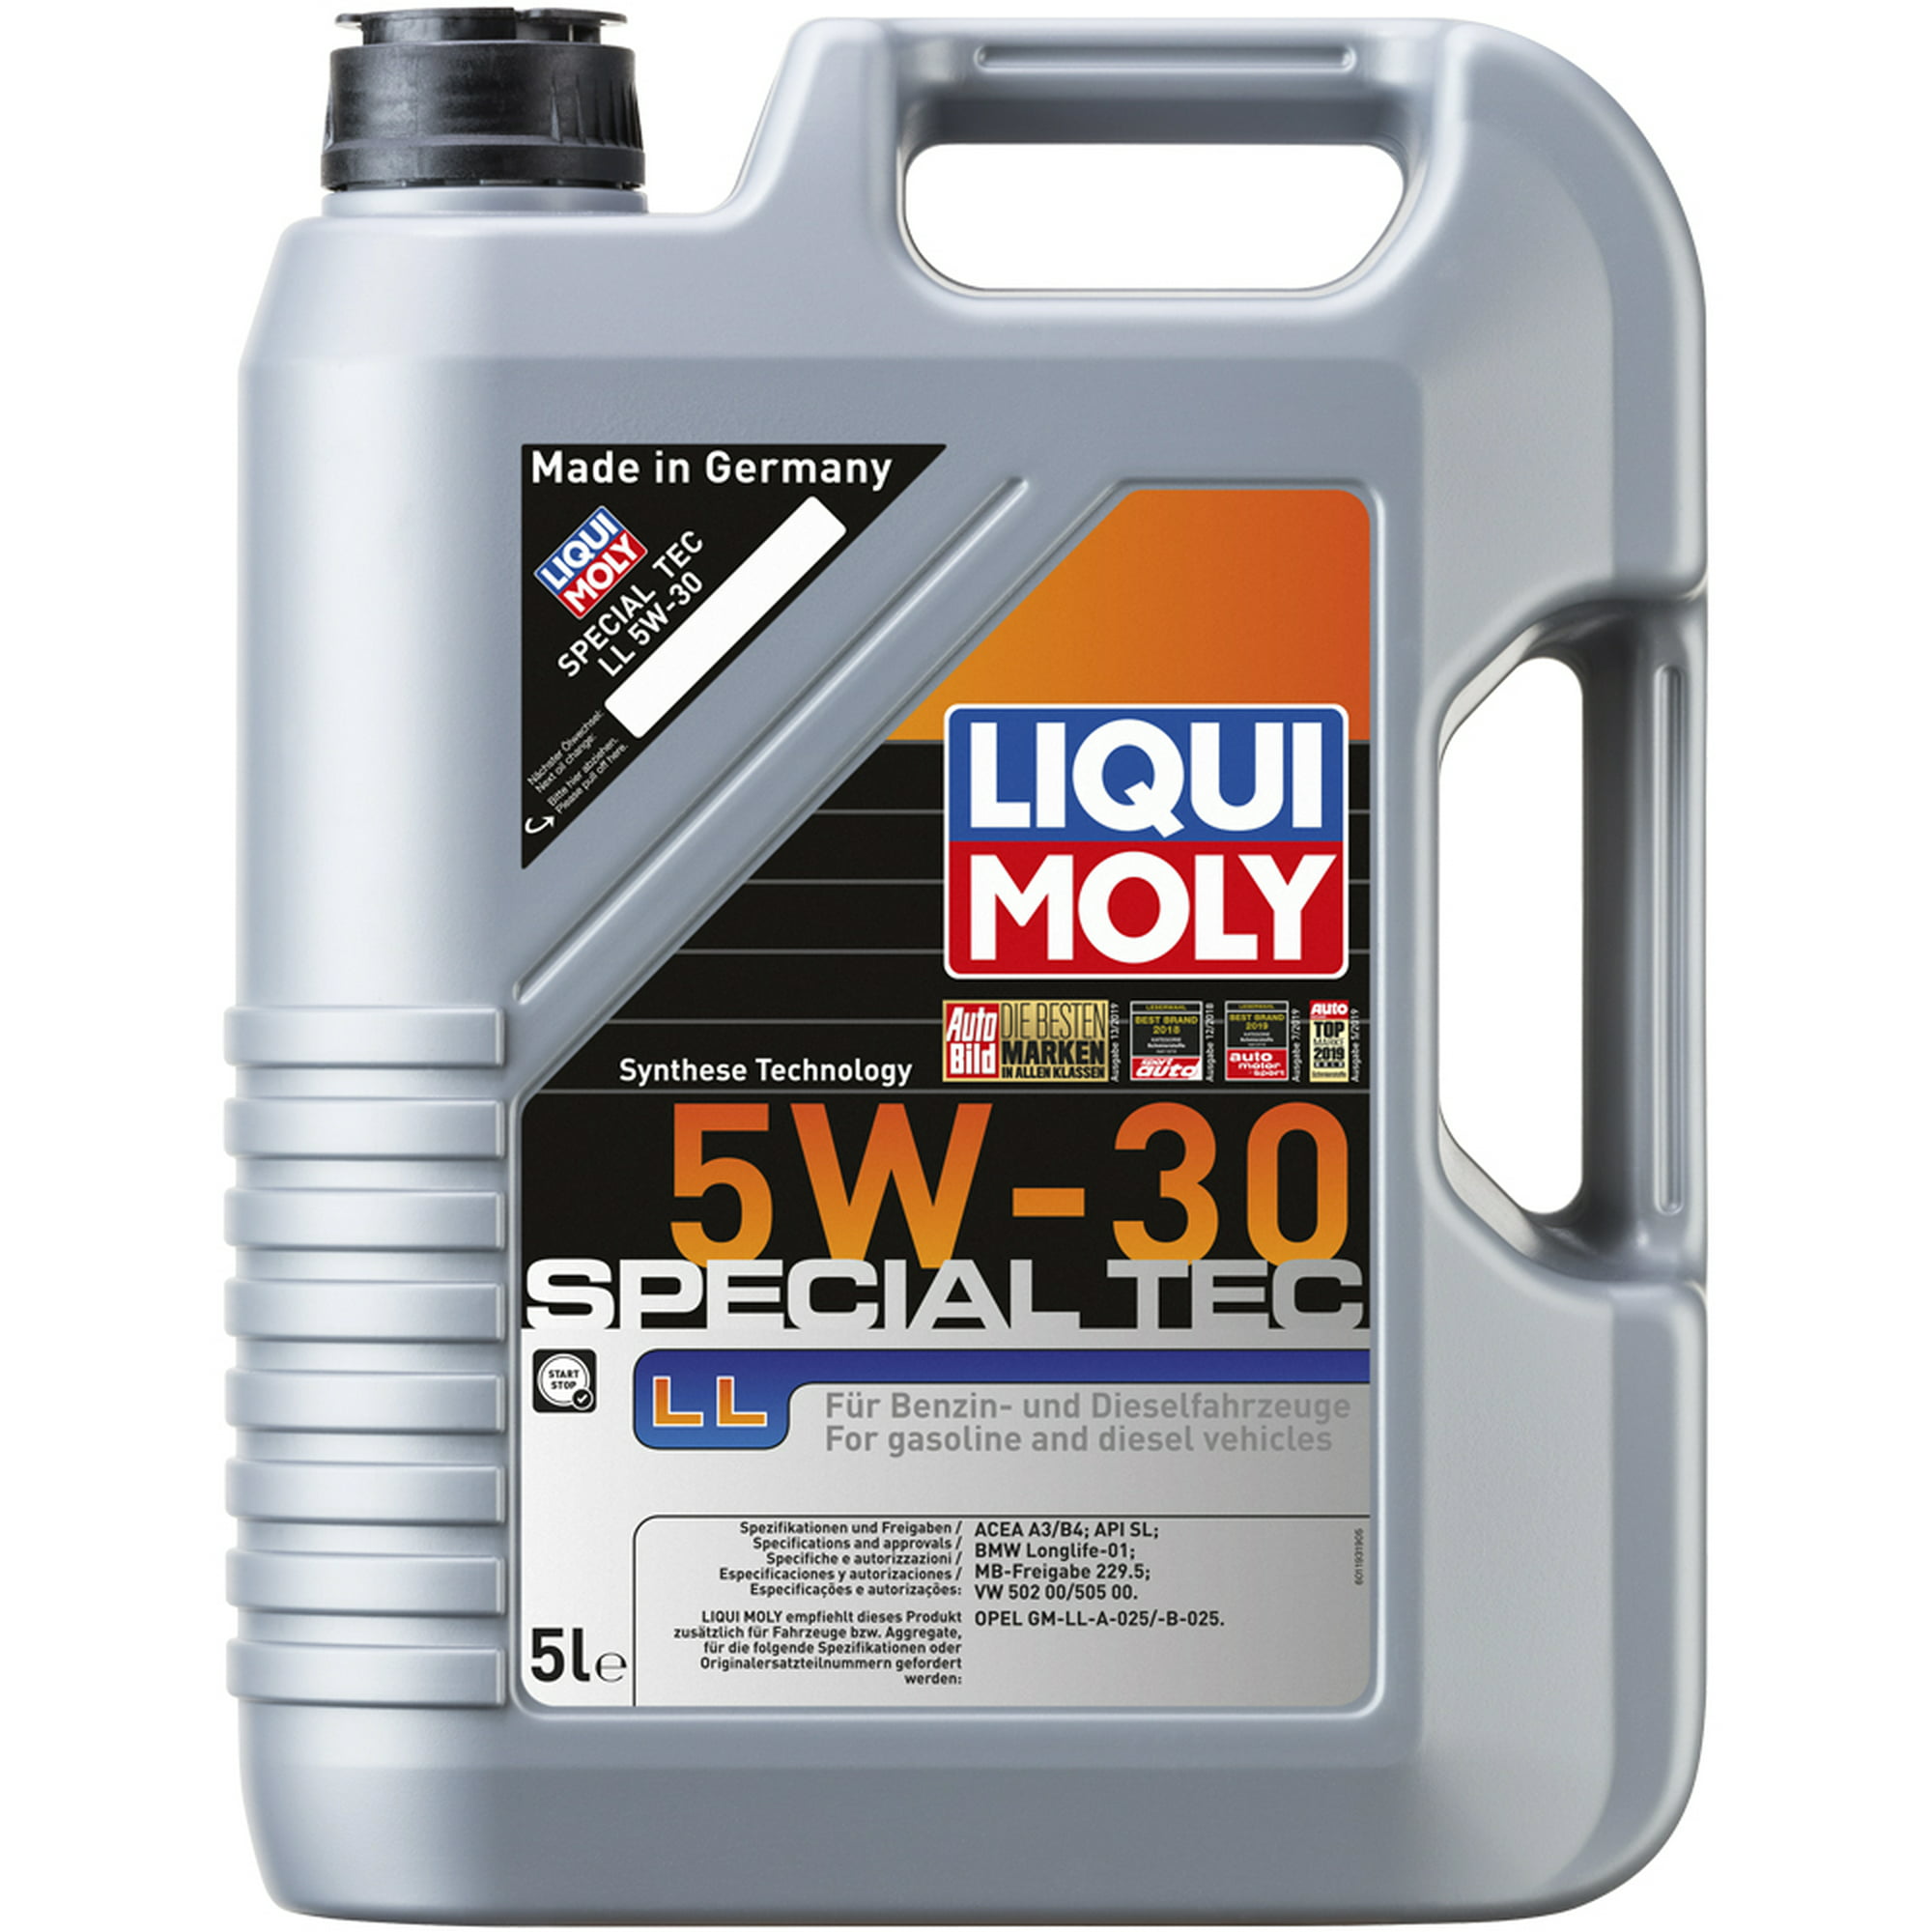 Specialtec 5w30 5lt aceite sintético para motores liqui moly .